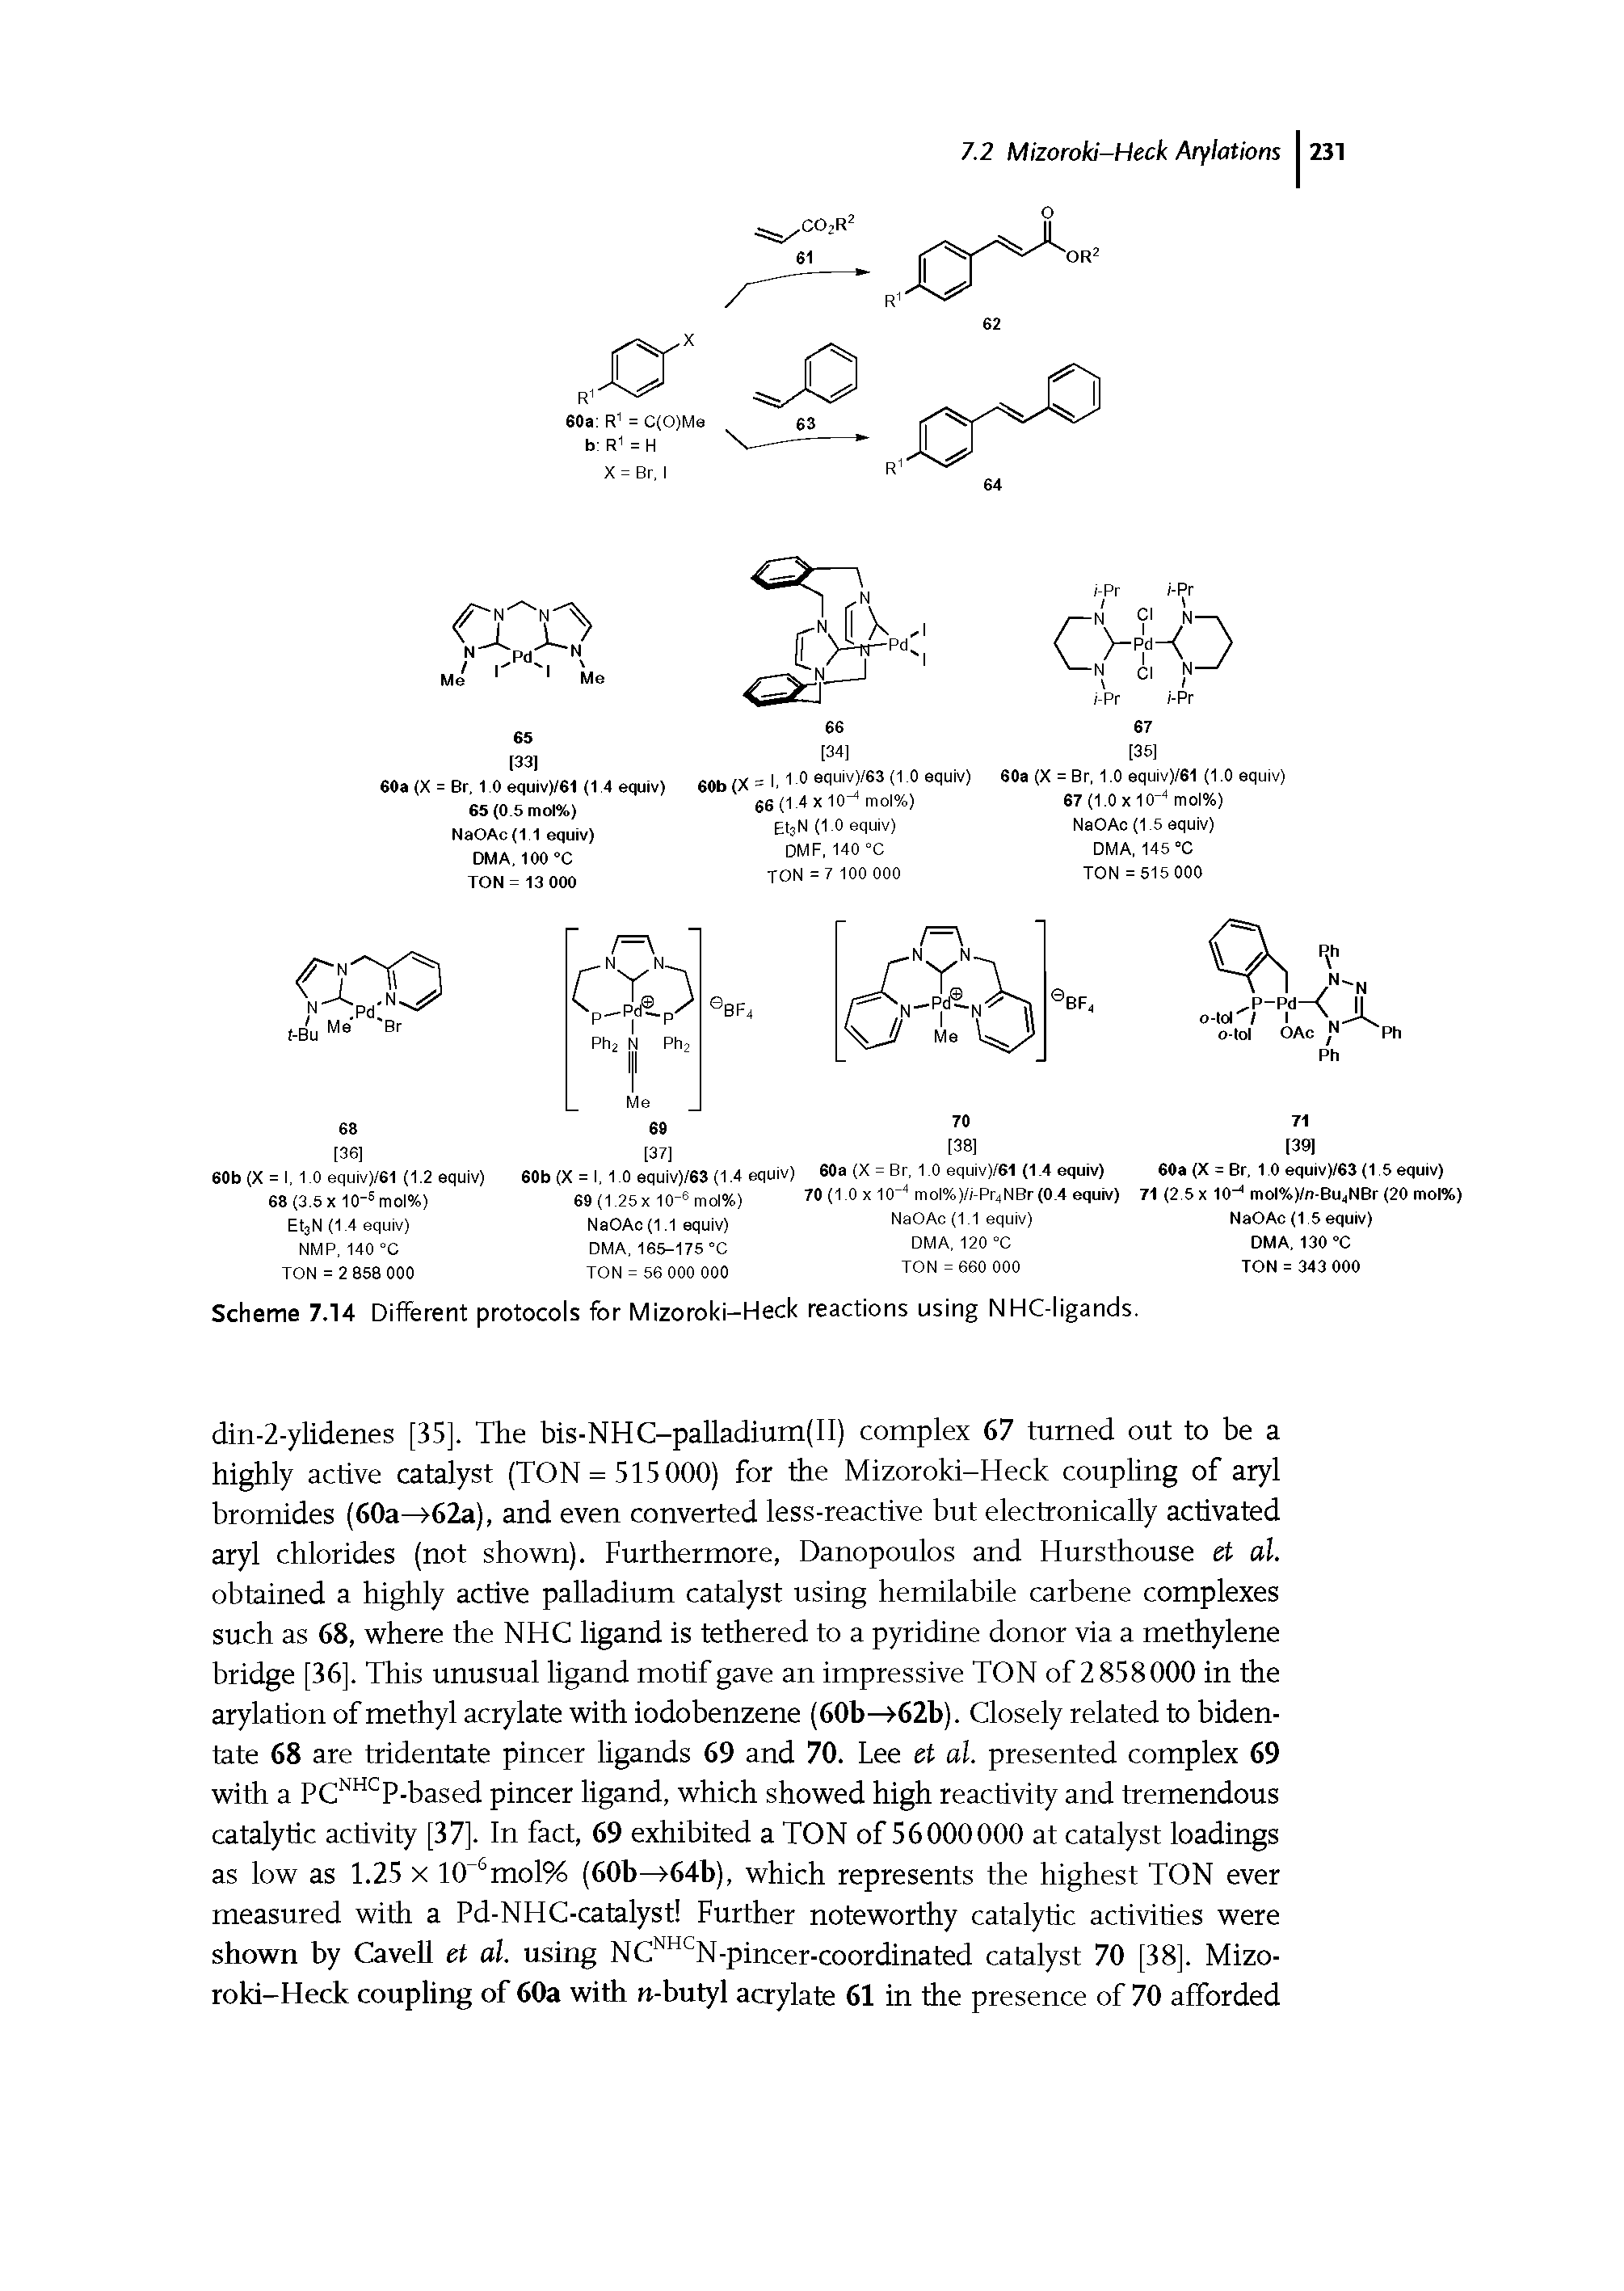 Scheme 7.14 Different protocols for Mizoroki-Heck reactions using NHC-ligands.